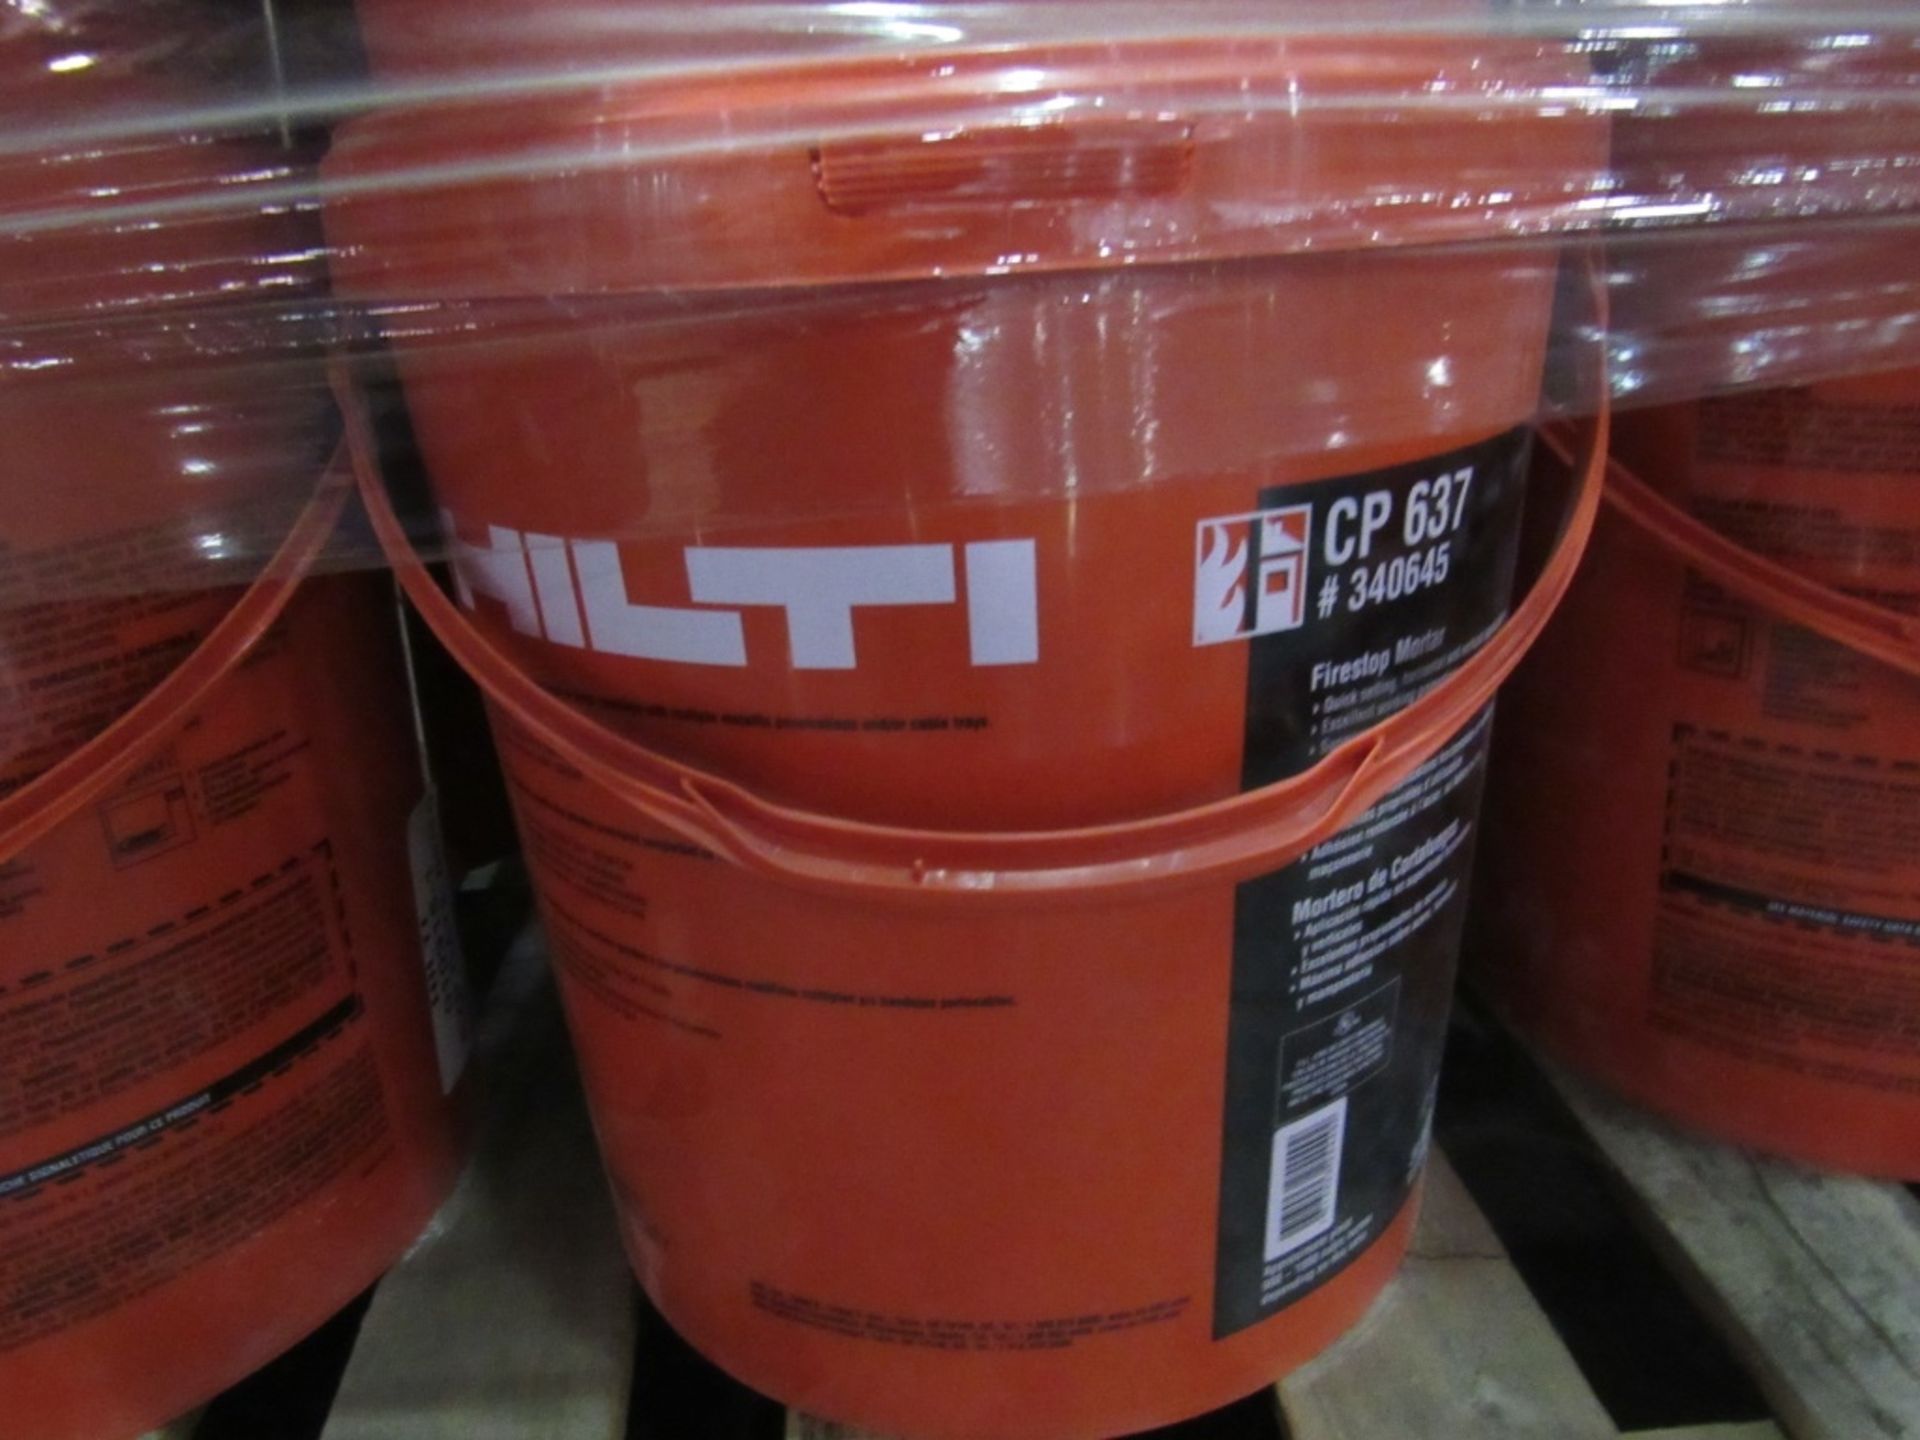 (qty - 18) Buckets of Hilti FireStop Mortar- ***Located in Cleveland, TN*** MFR - Hilti Model - CP - Image 2 of 5